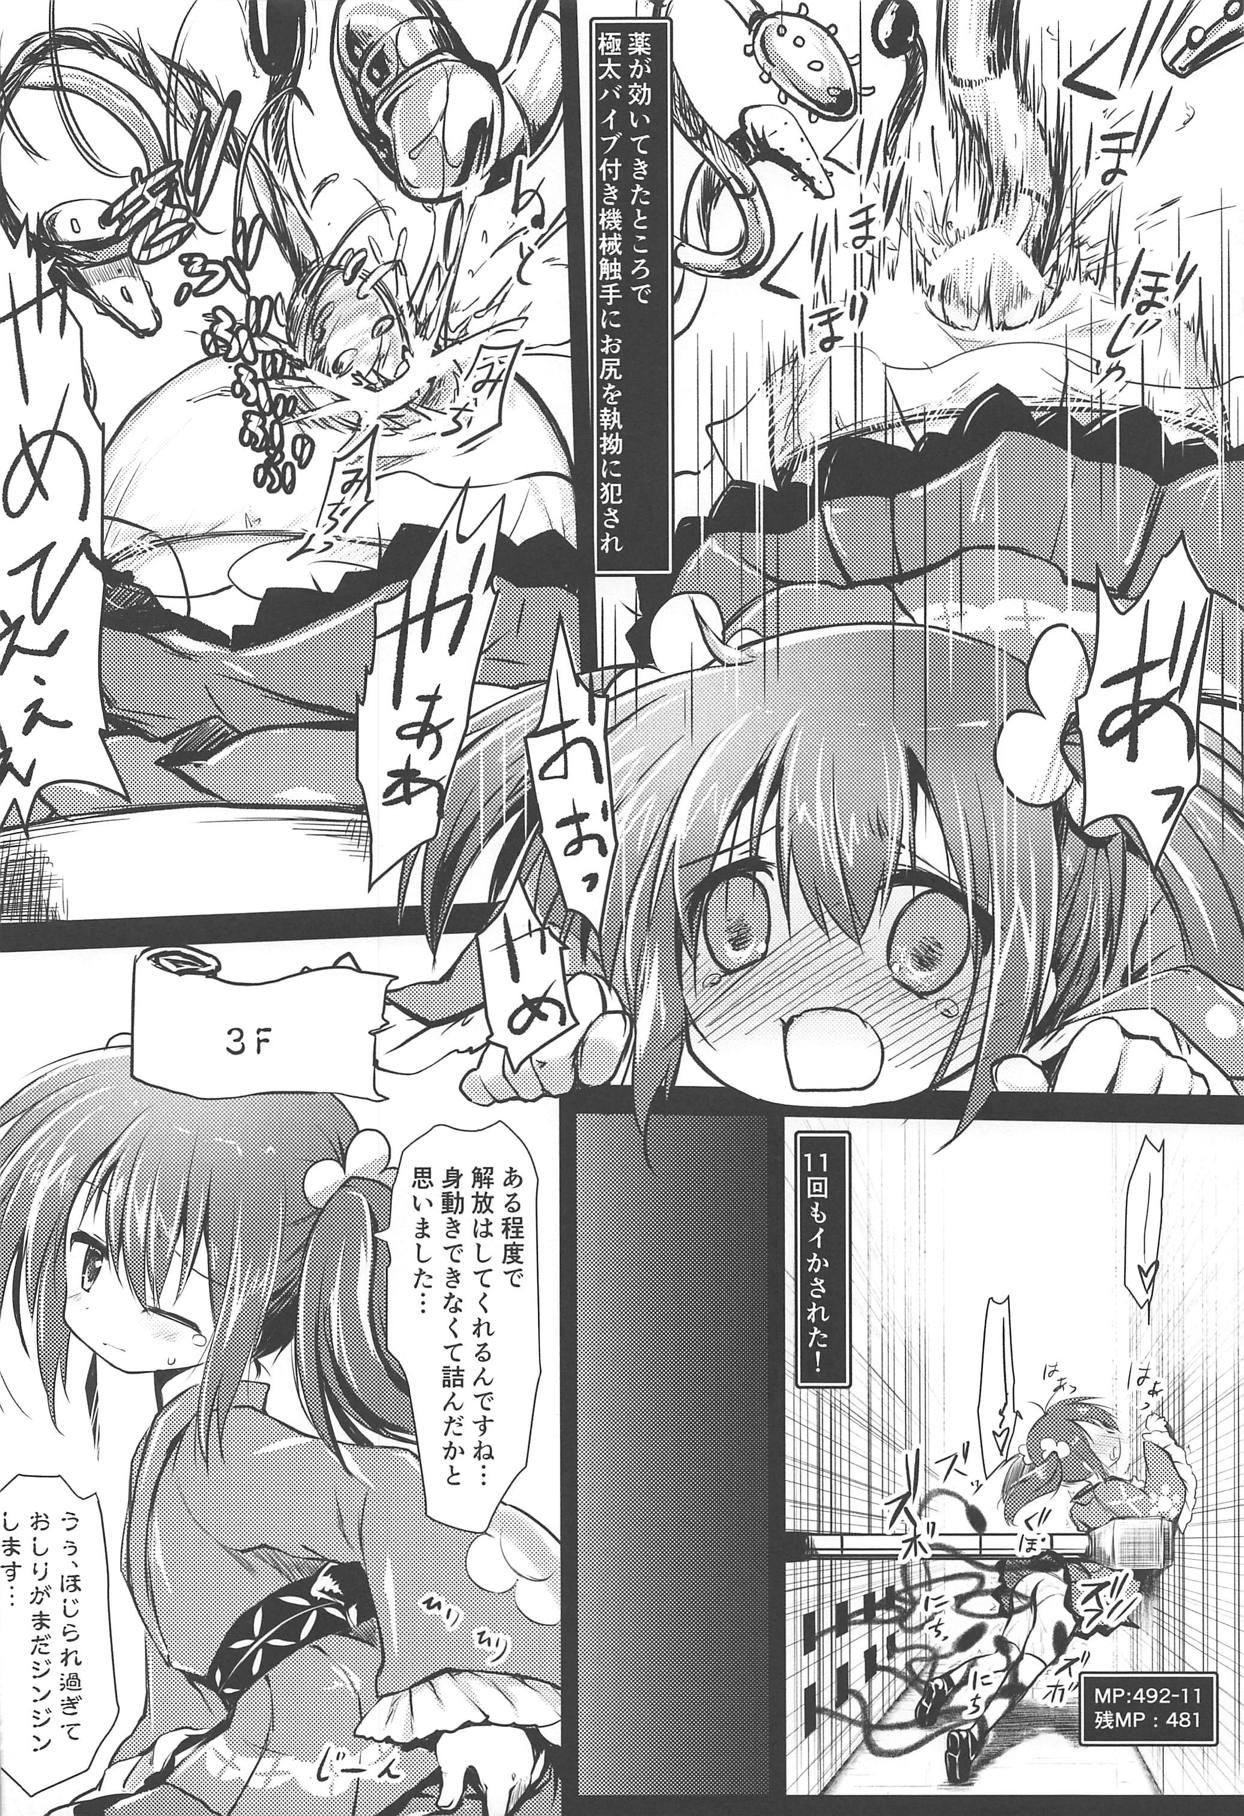 Paja Nishikigi VS Ero Trap D - Flower knight girl Gayfuck - Page 9